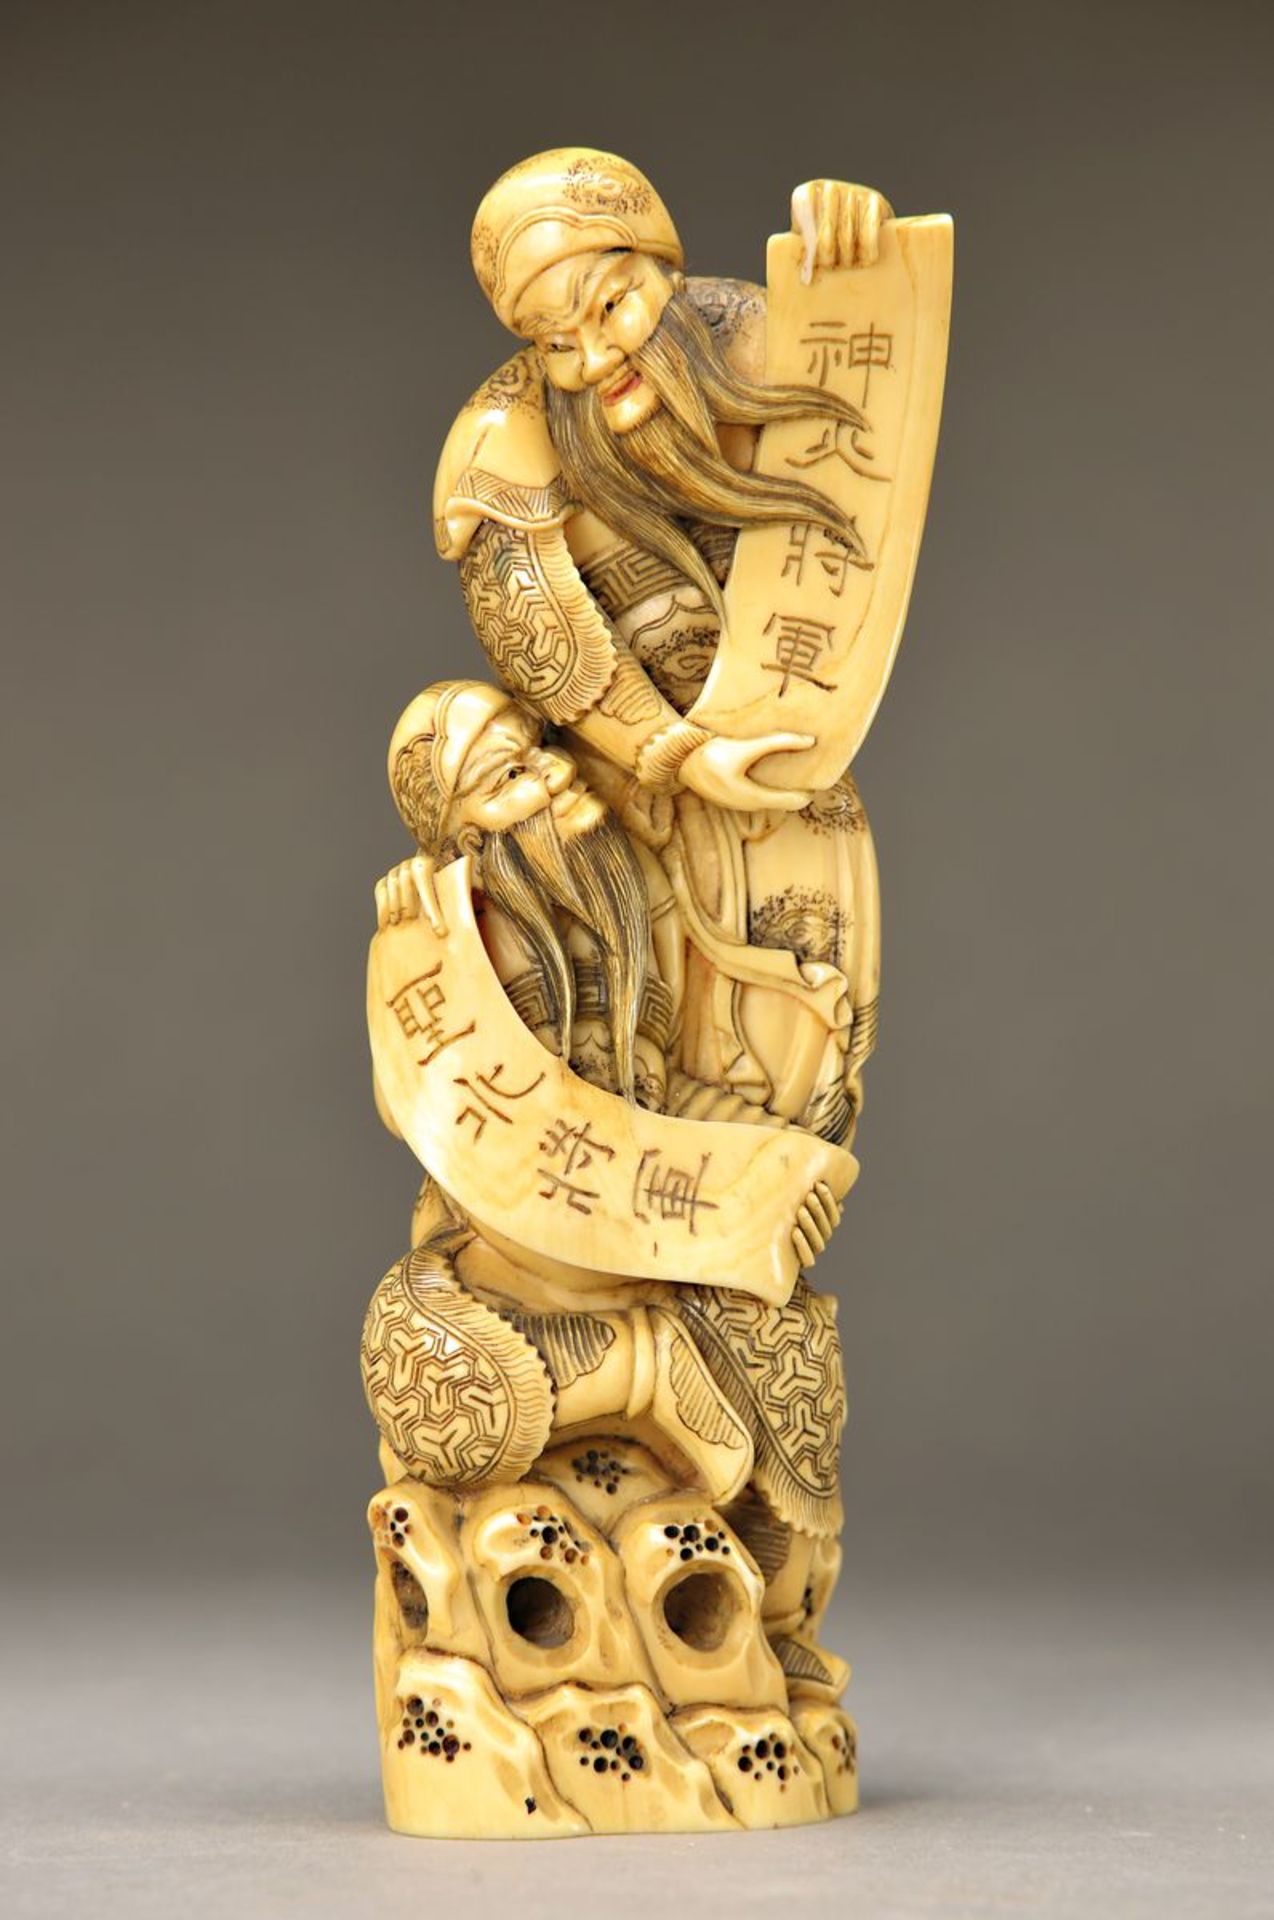 Elfenbeinschnitzerei, China, um 1900-10, vollplastische Figurengruppe, schöne tiefe Schnitzerei,